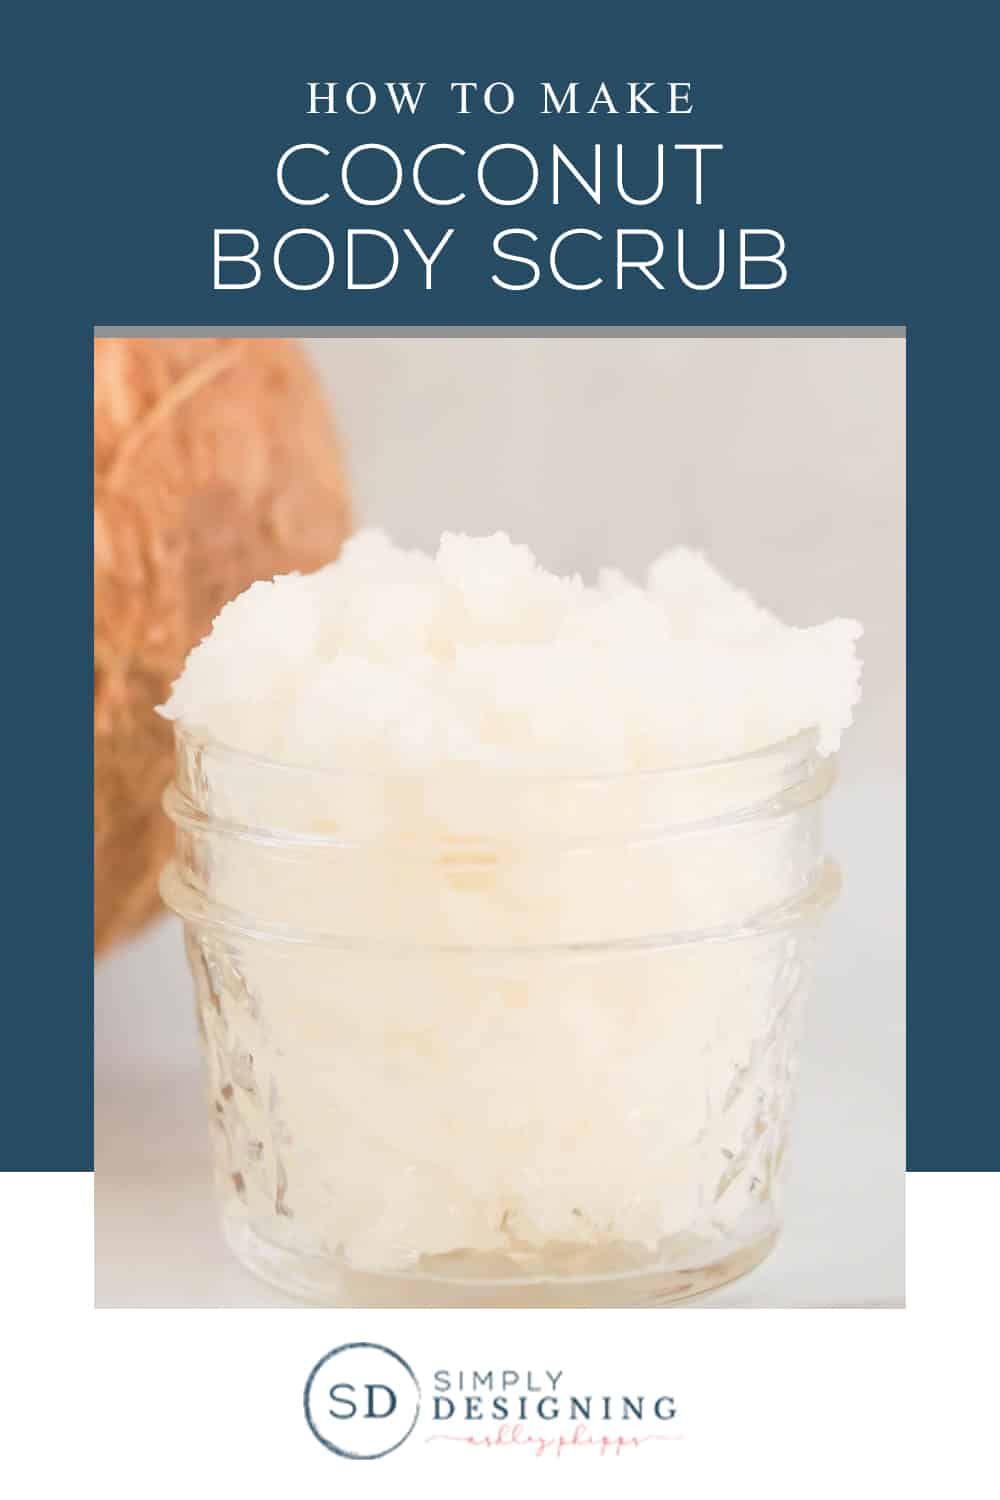 How to Make Coconut Body Scrub